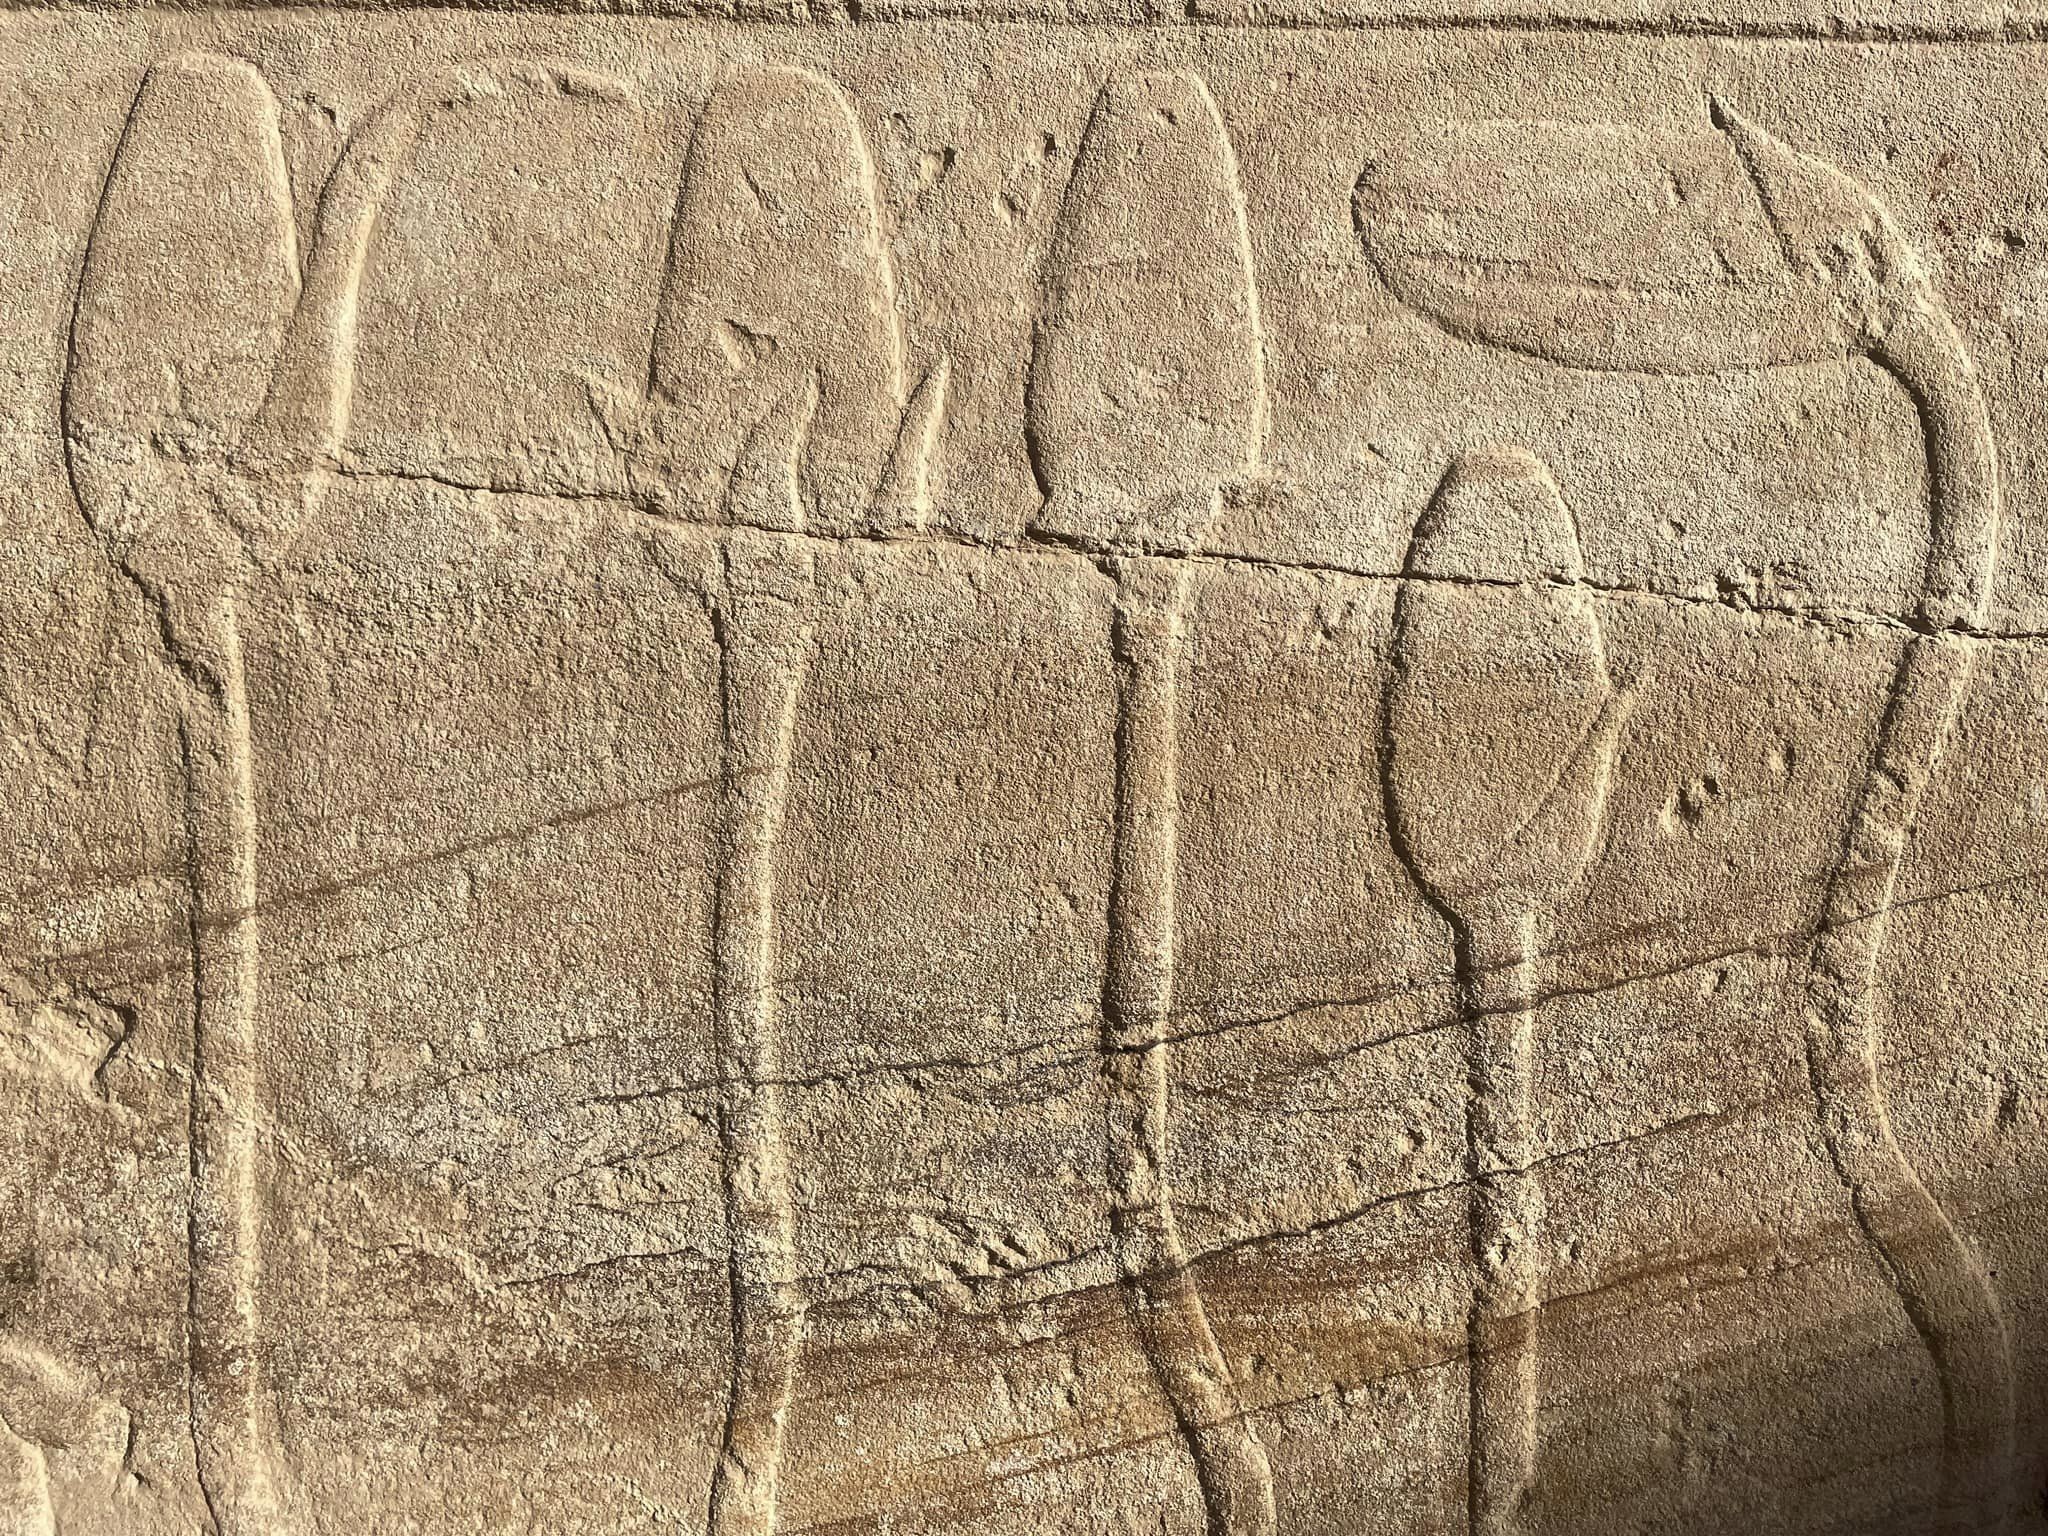 Herbier du jardin botanique de Thoutmosis III dans le temple de Karnak.